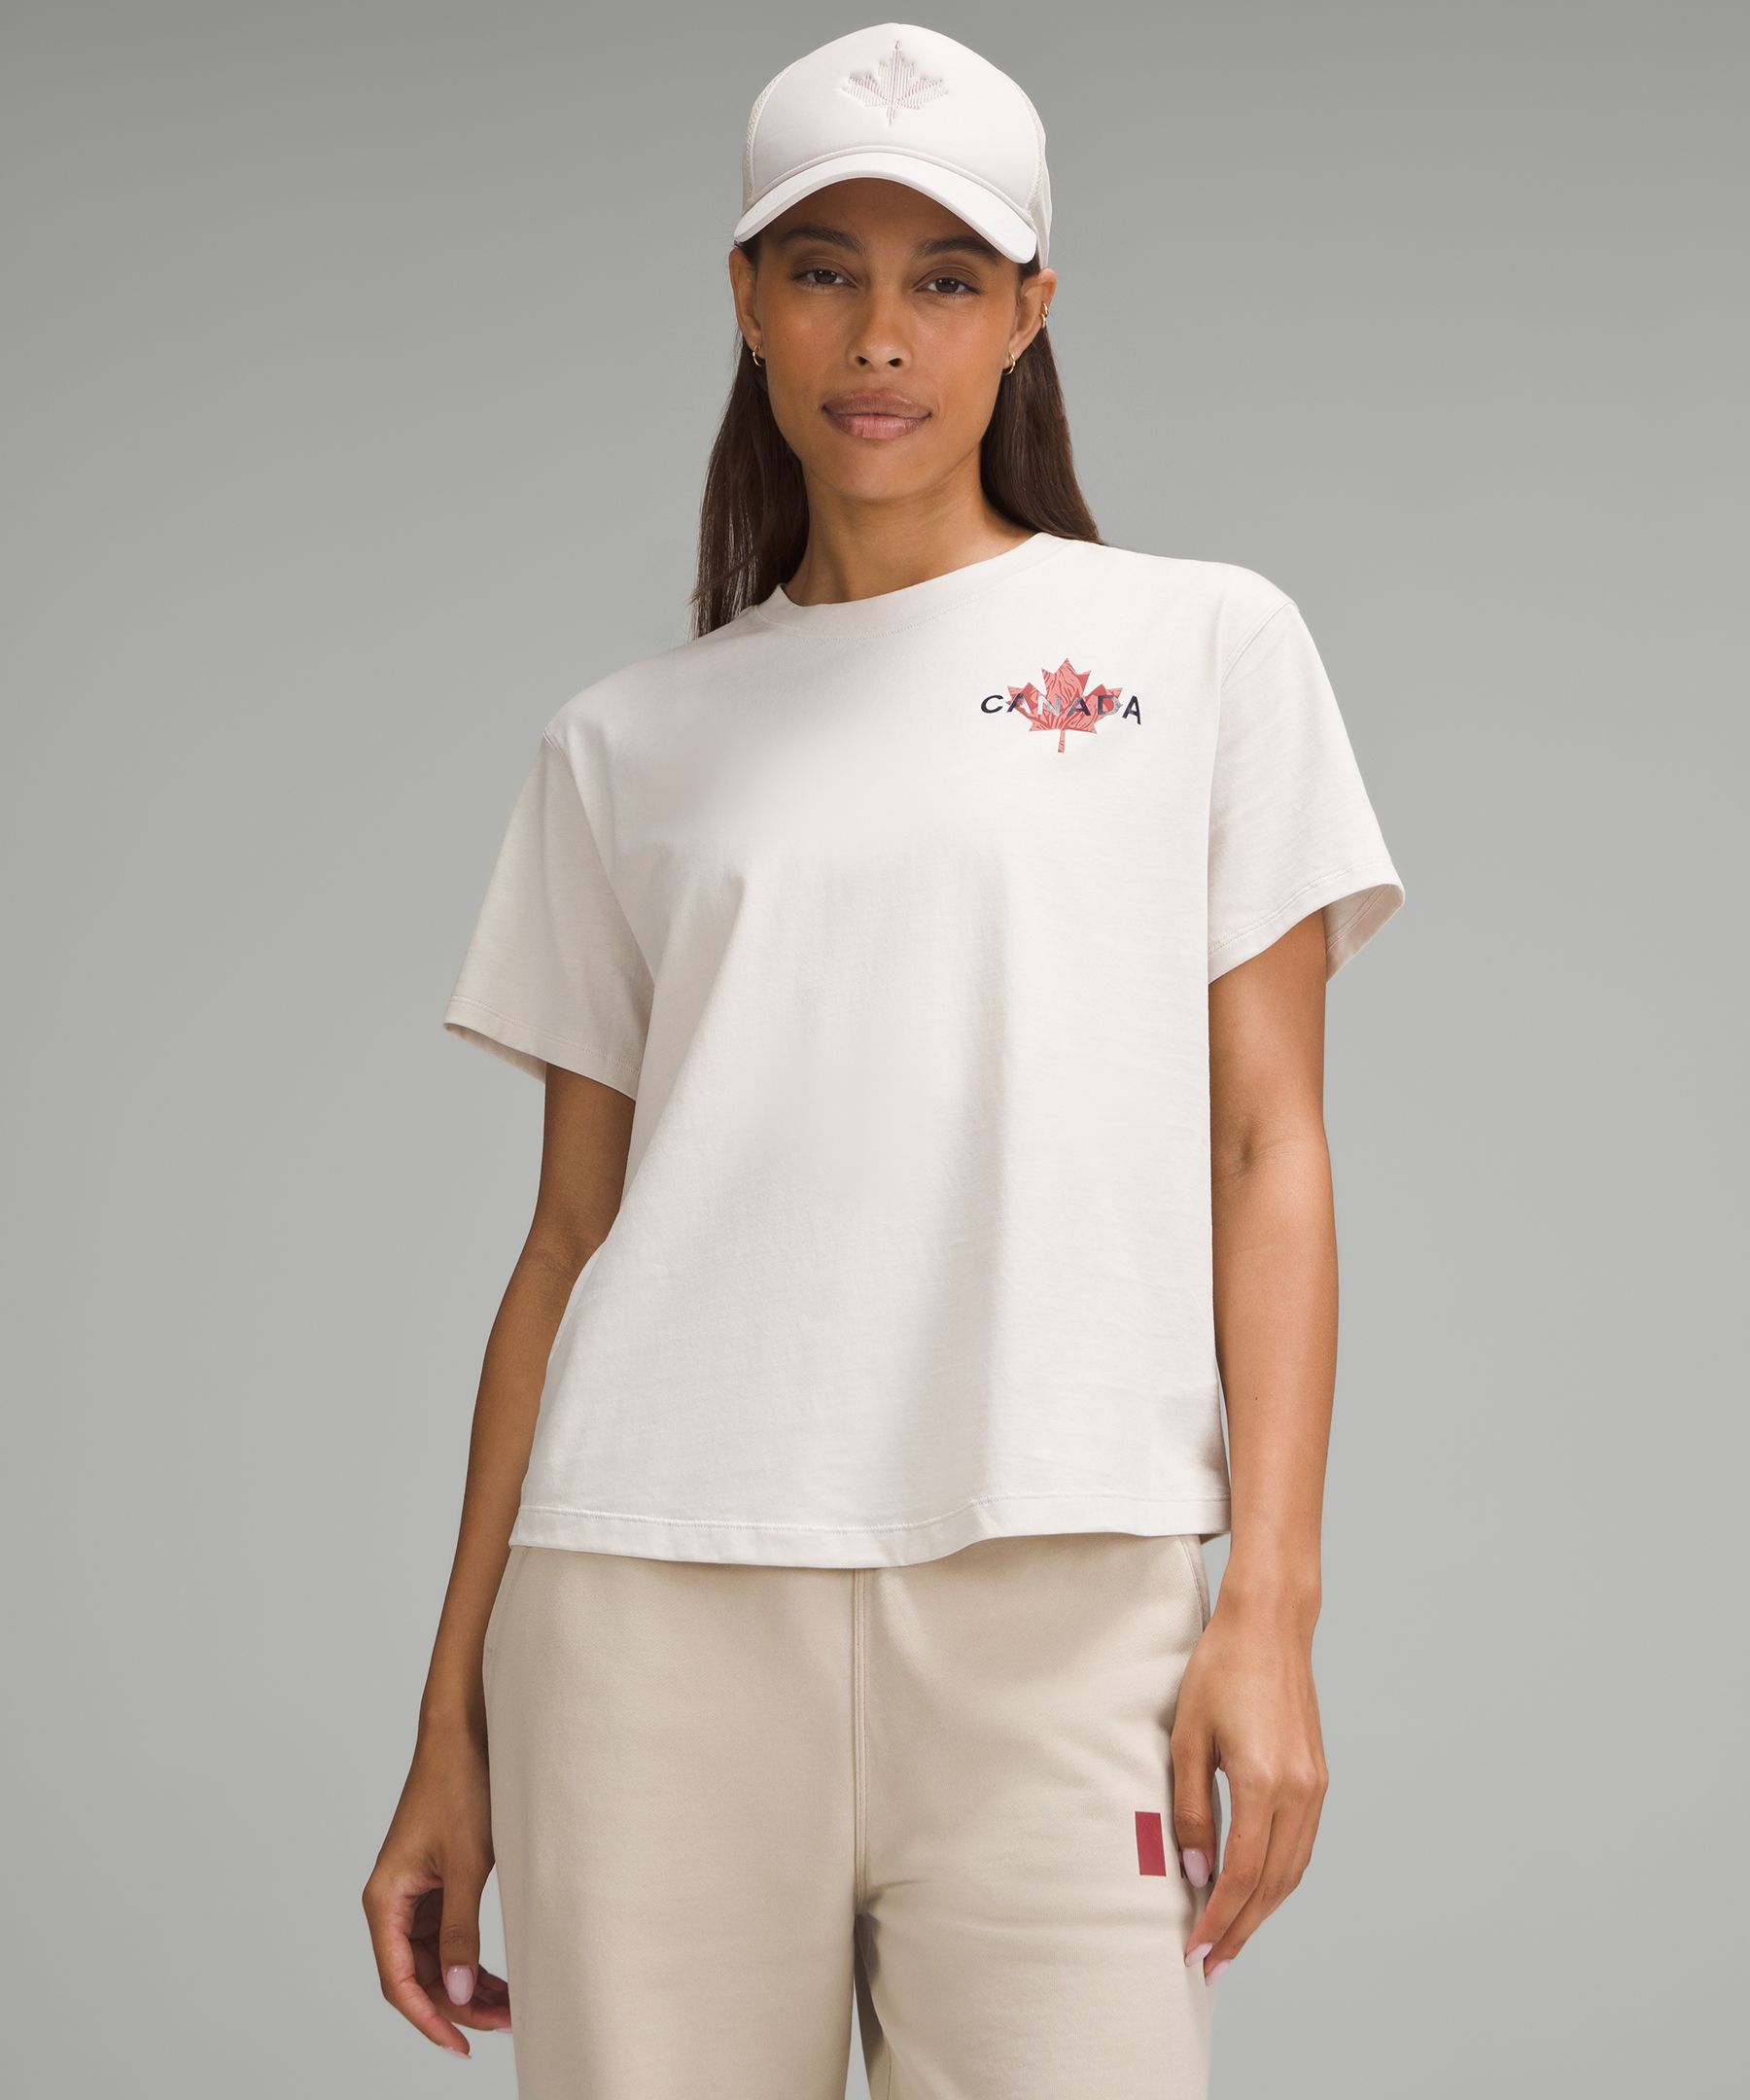 Team Canada Women's Cotton Jersey Graphic T-Shirt *COC Logo | Short Sleeve Shirts & Tee's